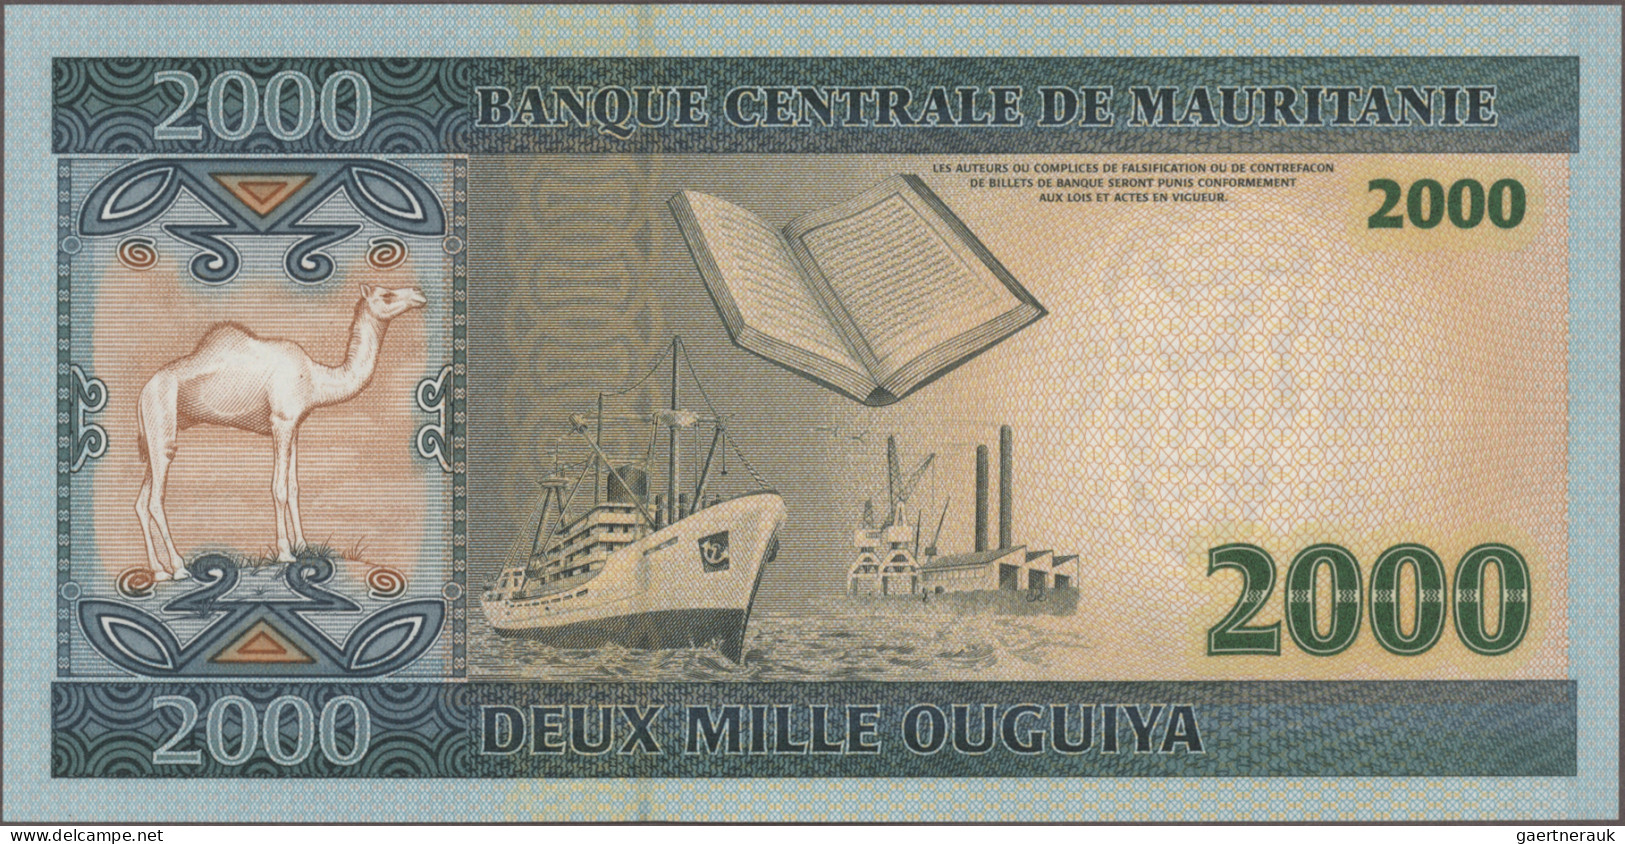 Mauritania: Banque Centrale De Mauritanie, Huge Lot With 14 Banknotes, 1985-2012 - Mauritania